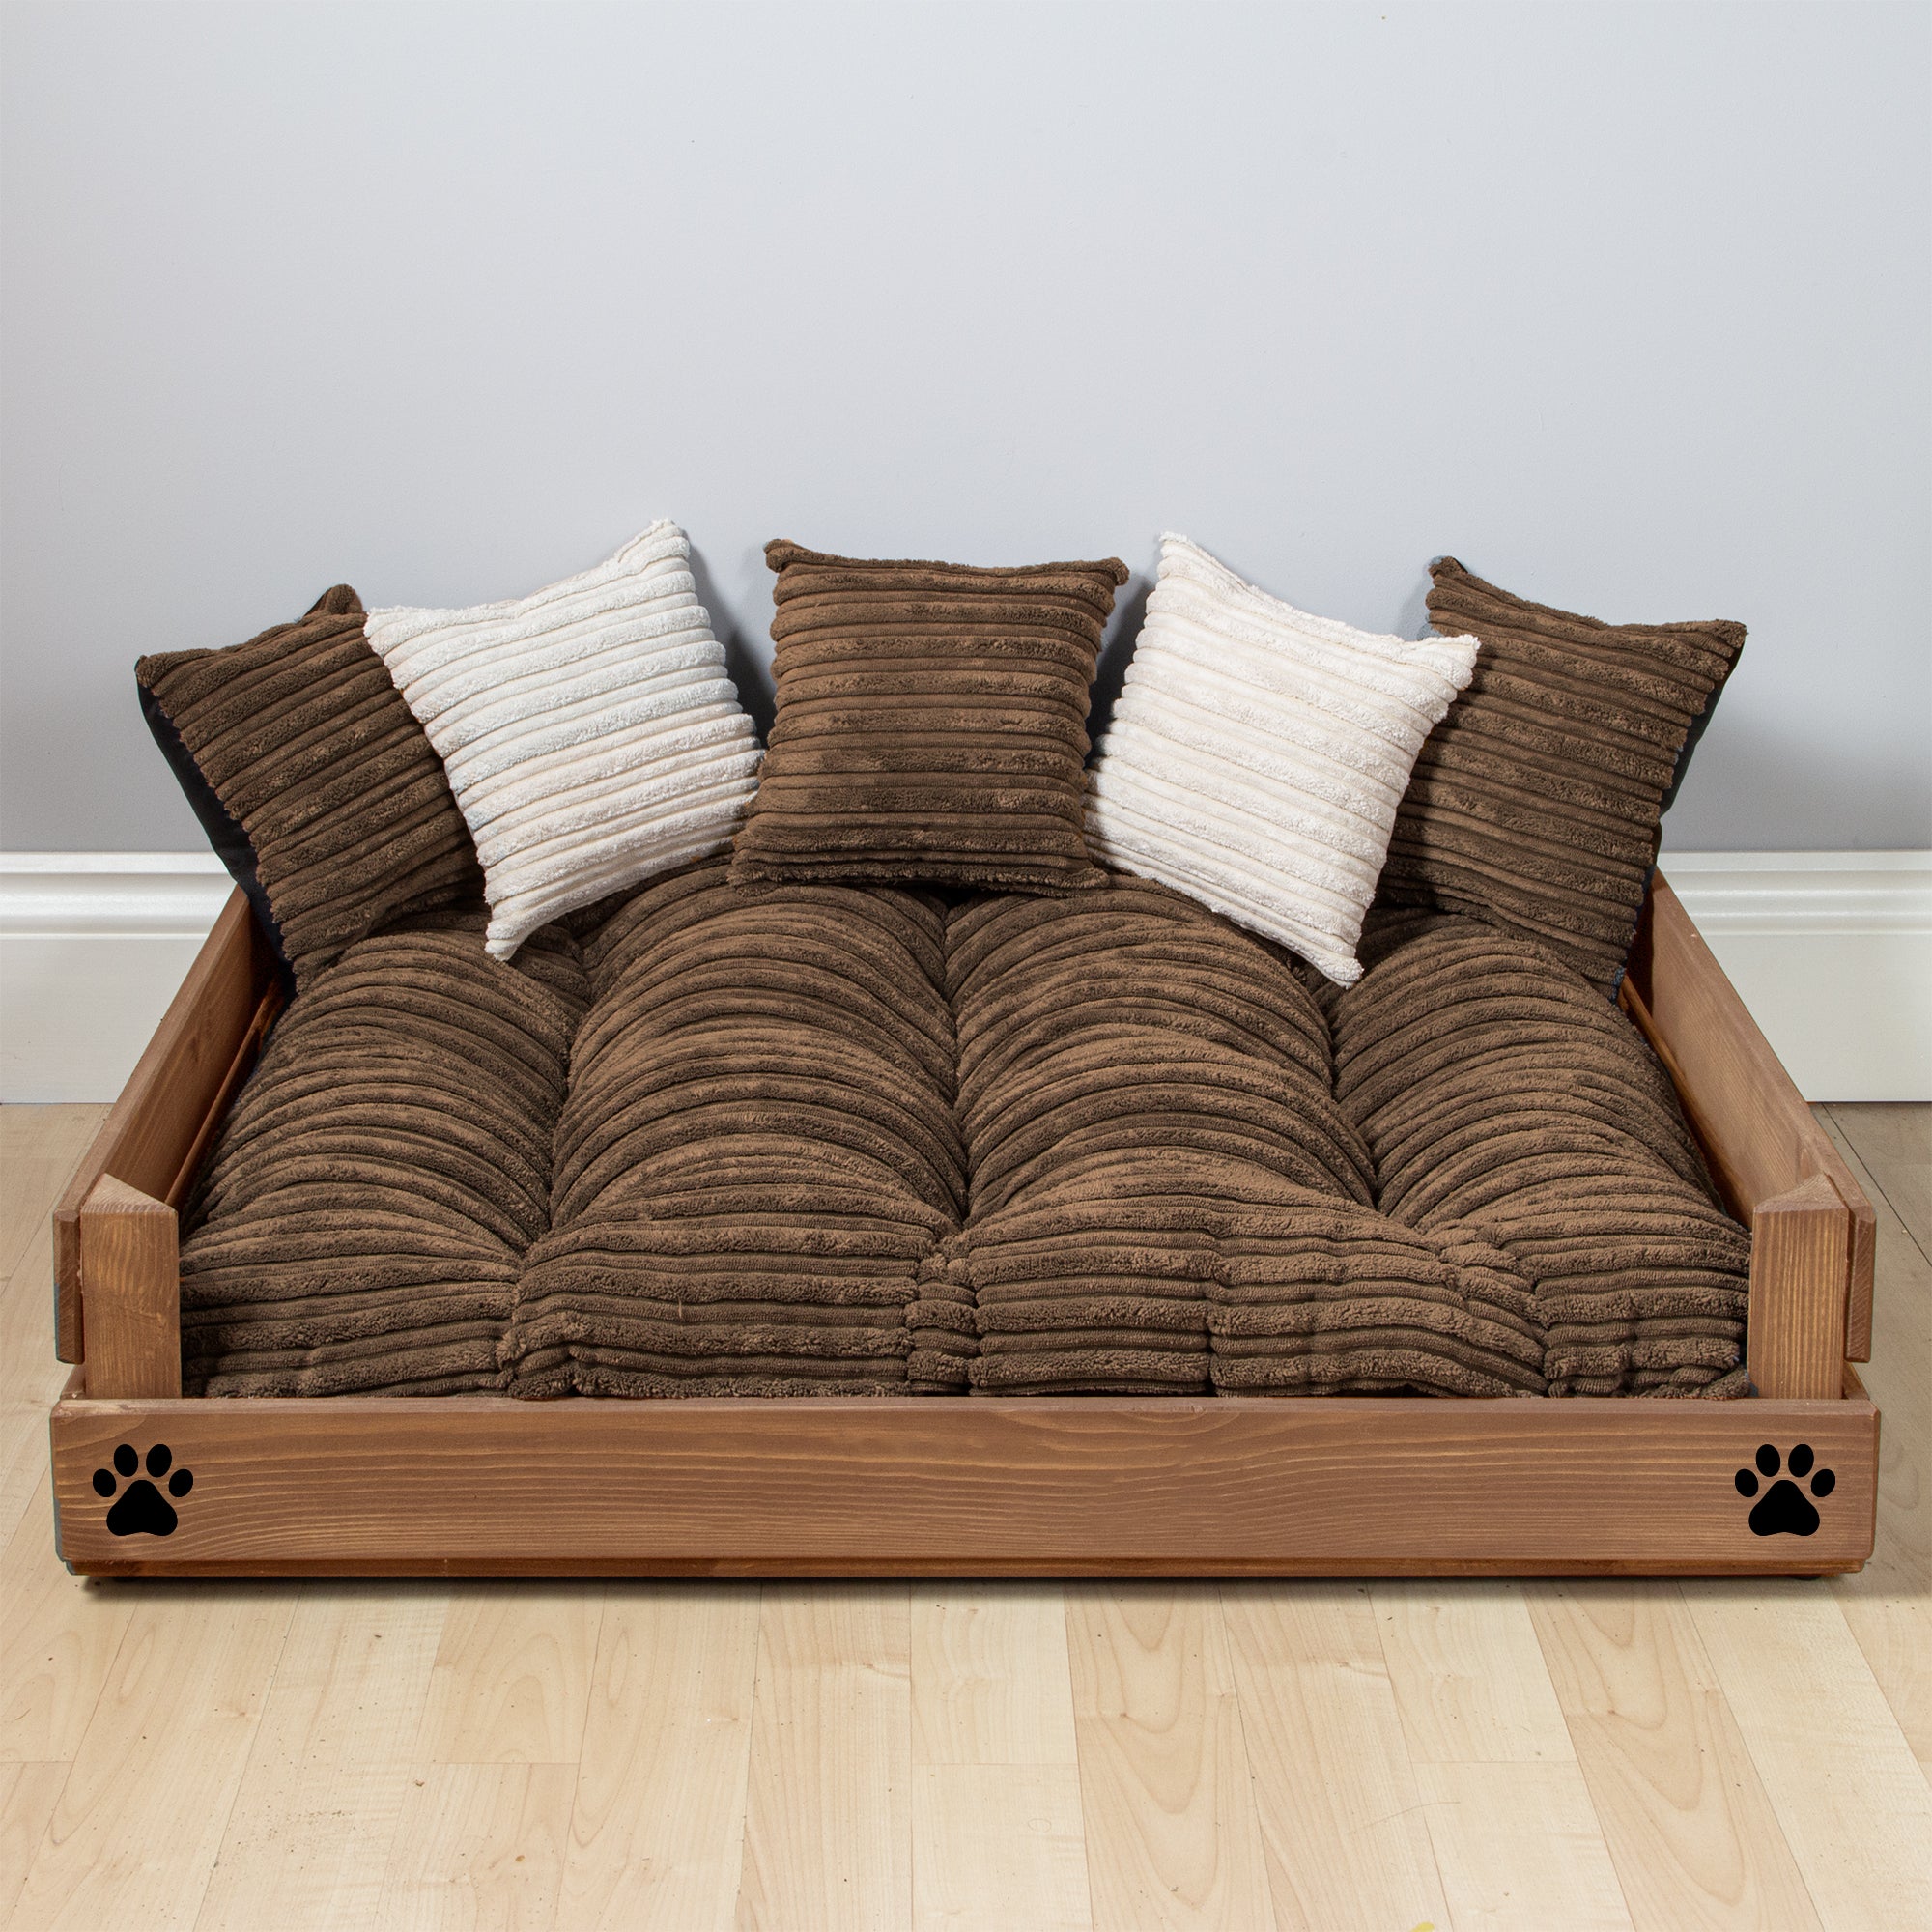 Medium Wooden Personalised Dog Bed (59 x 76cm) - Royal Oak & Corduroy Brown